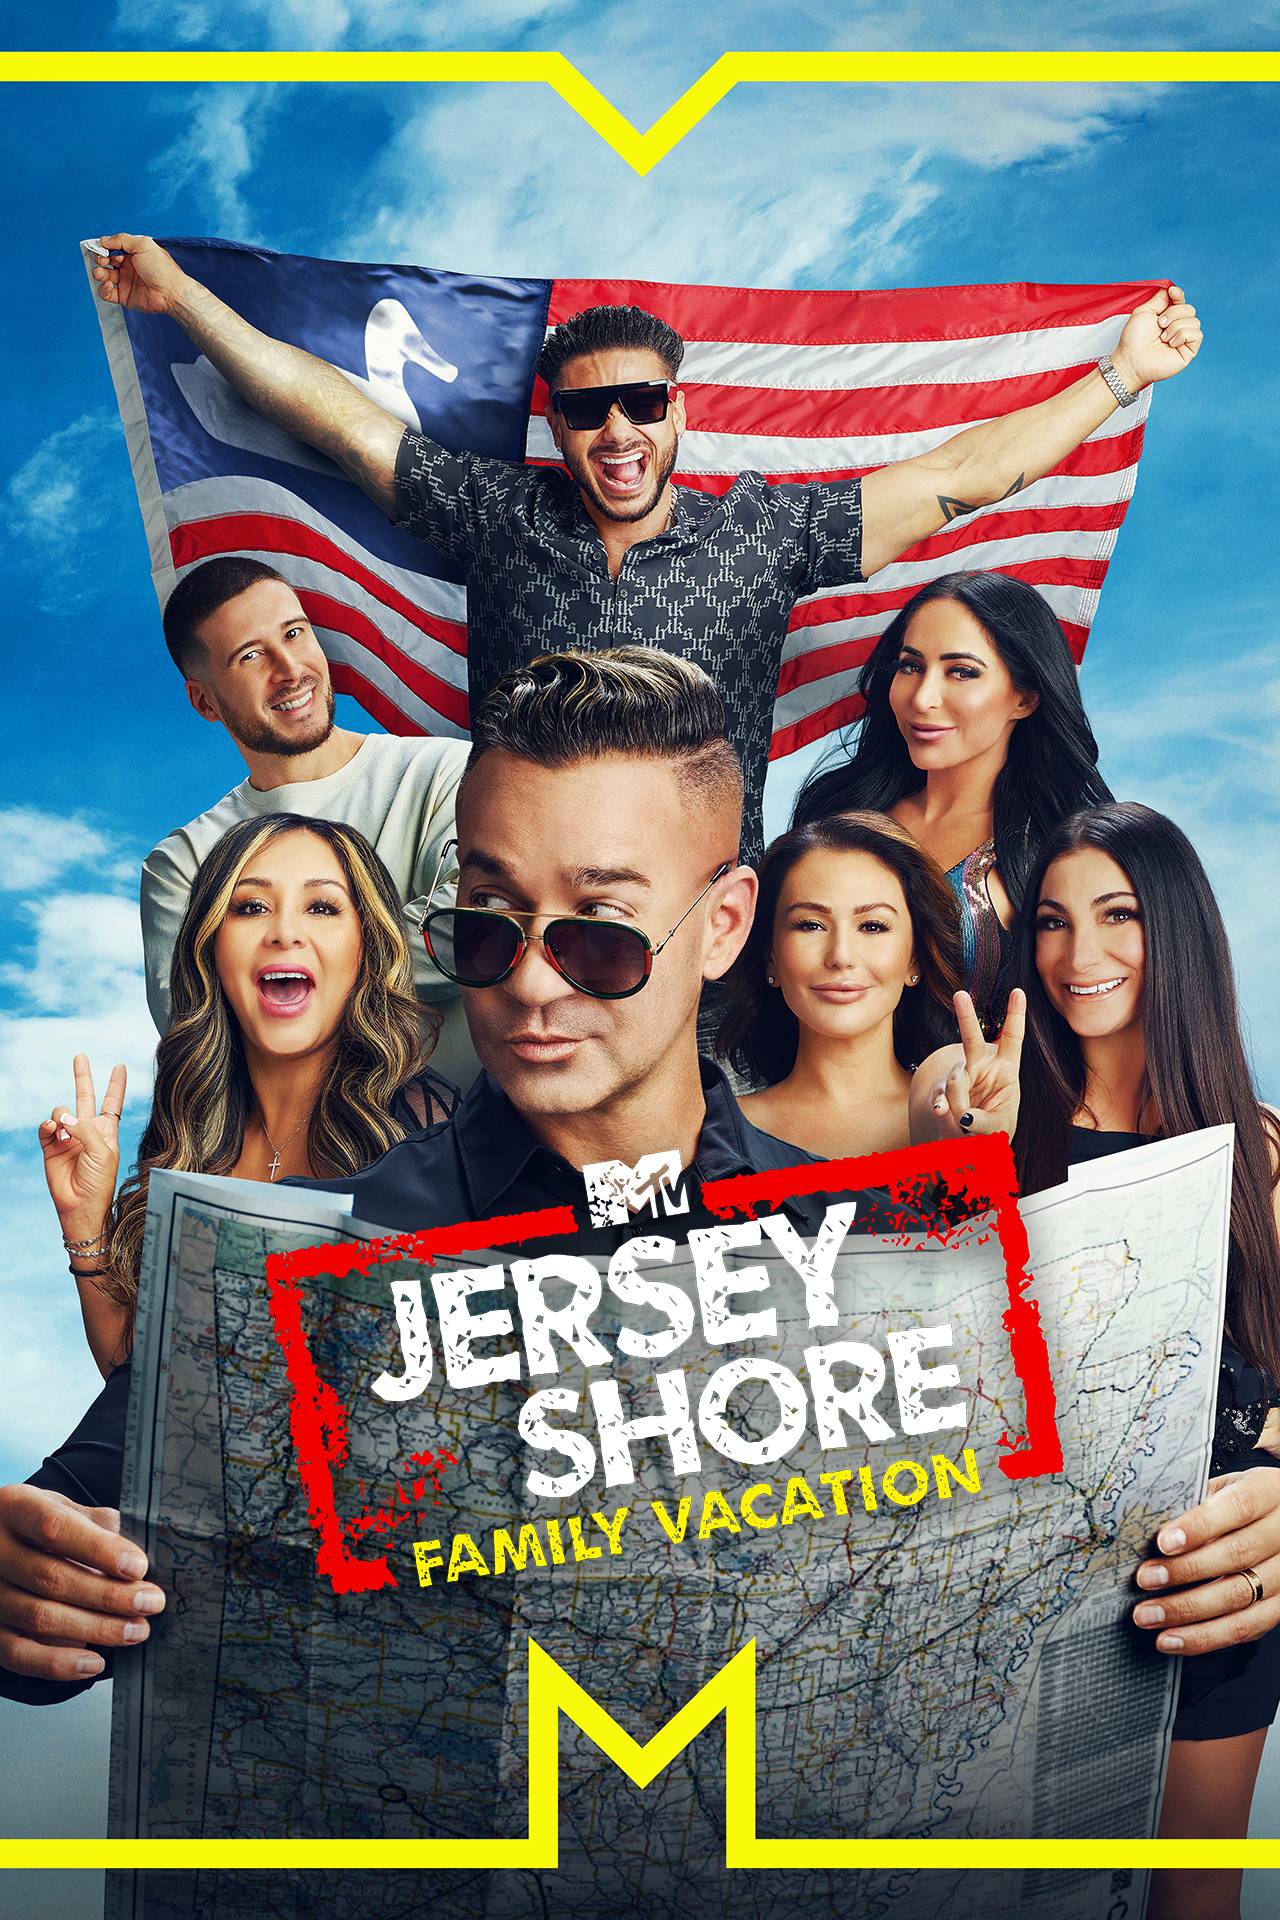 Omtrek Ver weg crisis Jersey Shore Family Vacation - Season 3 - TV Series | MTV